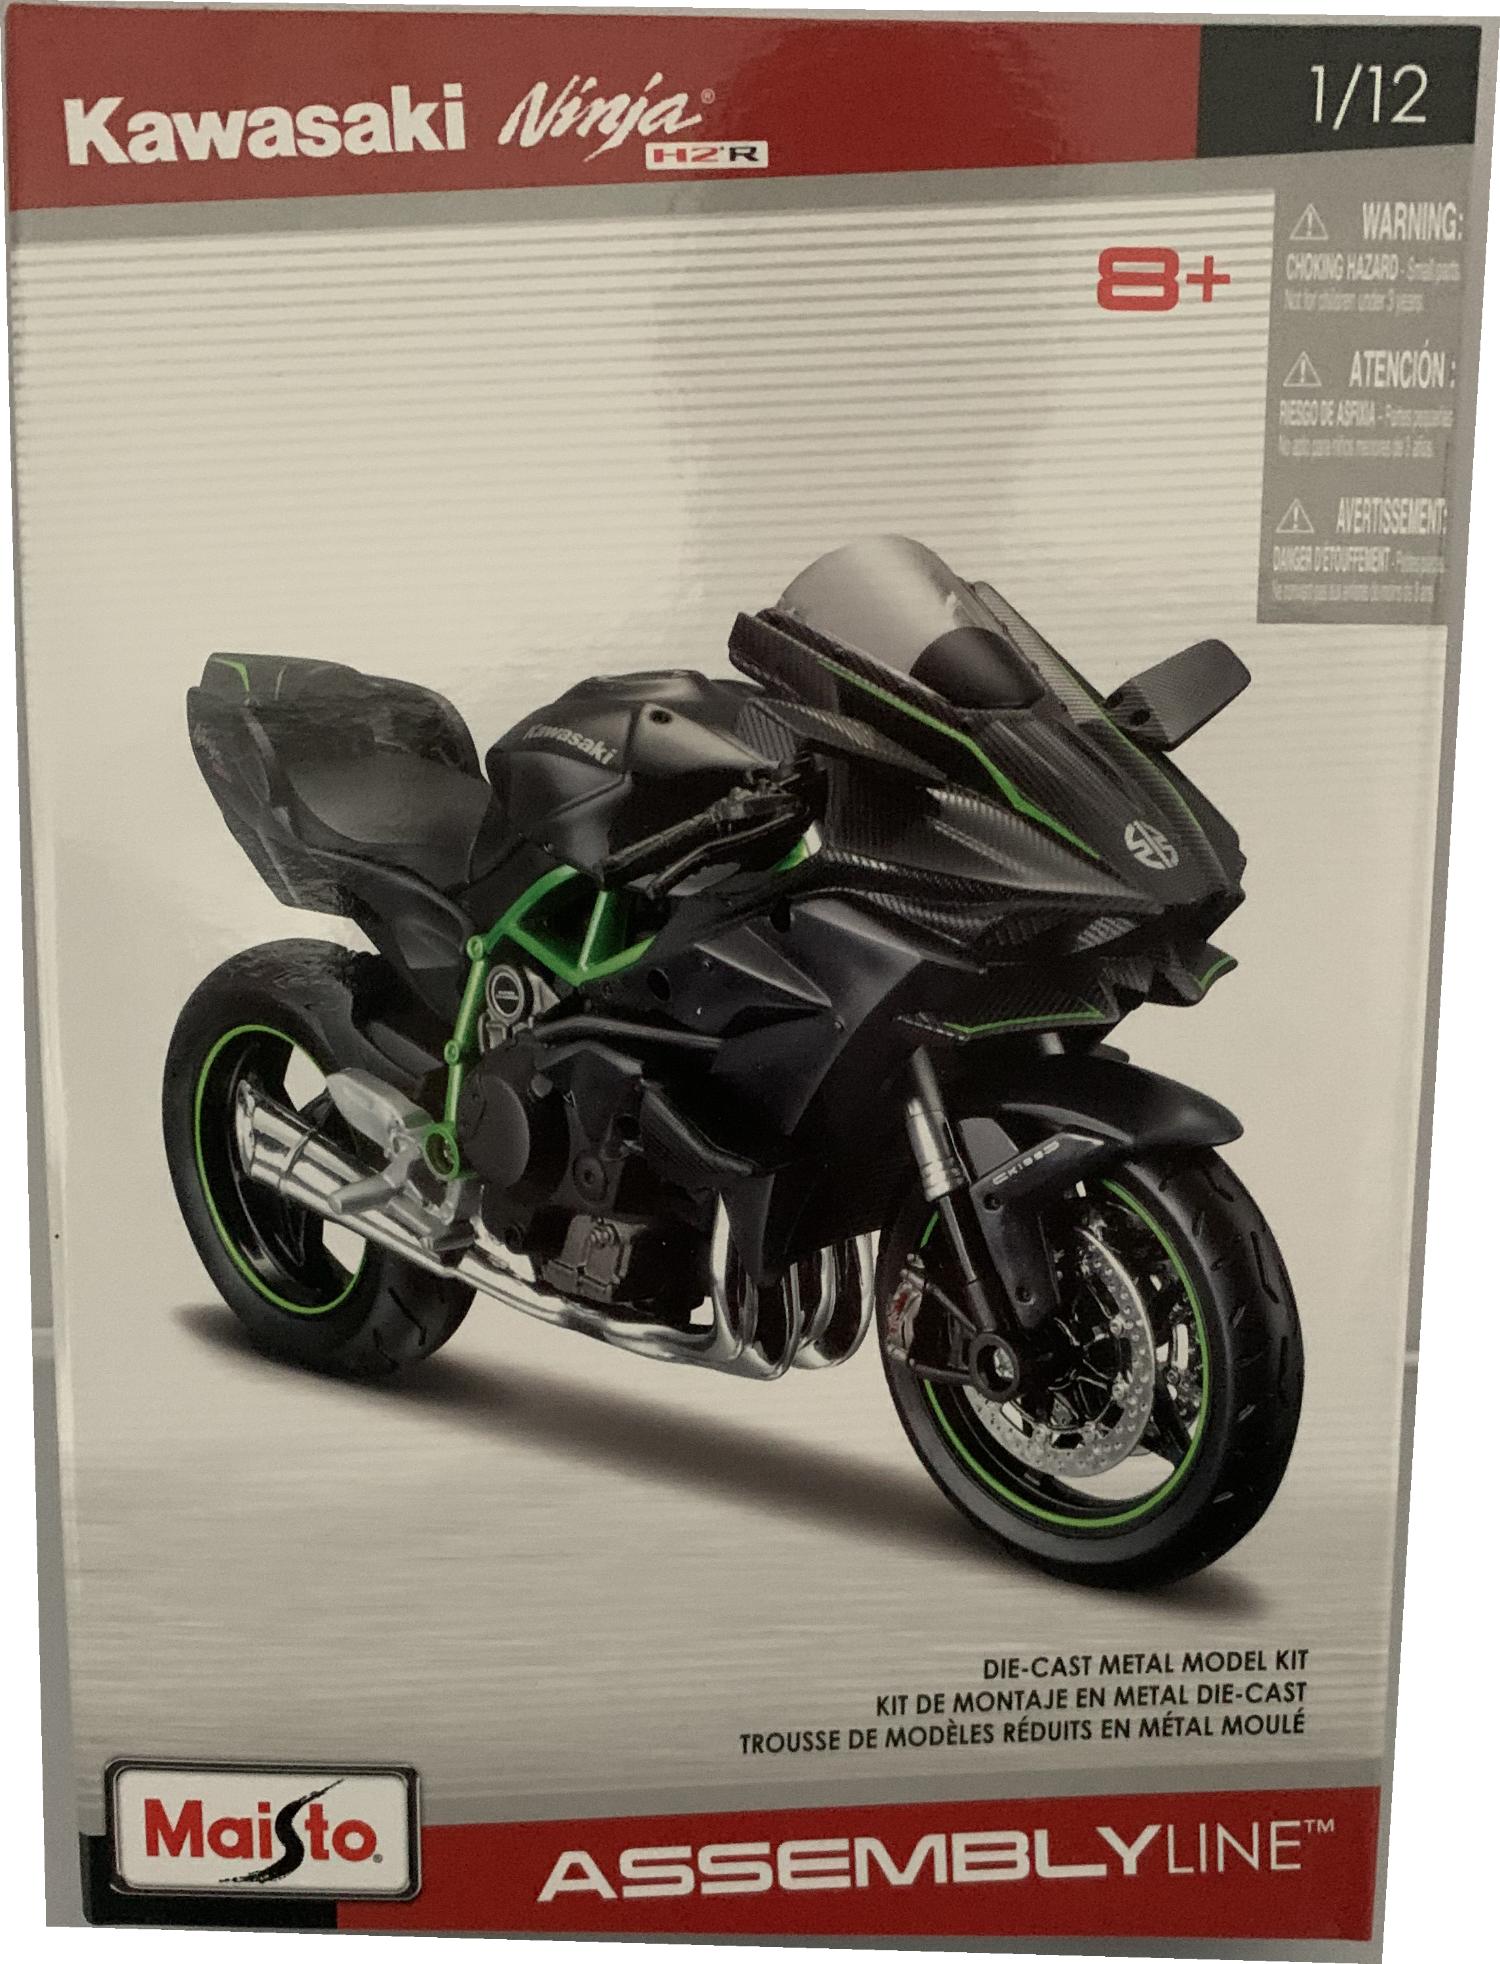 Kawasaki Ninja H2 R 2020 in grey and green 1:12 scale model kit from Maisto